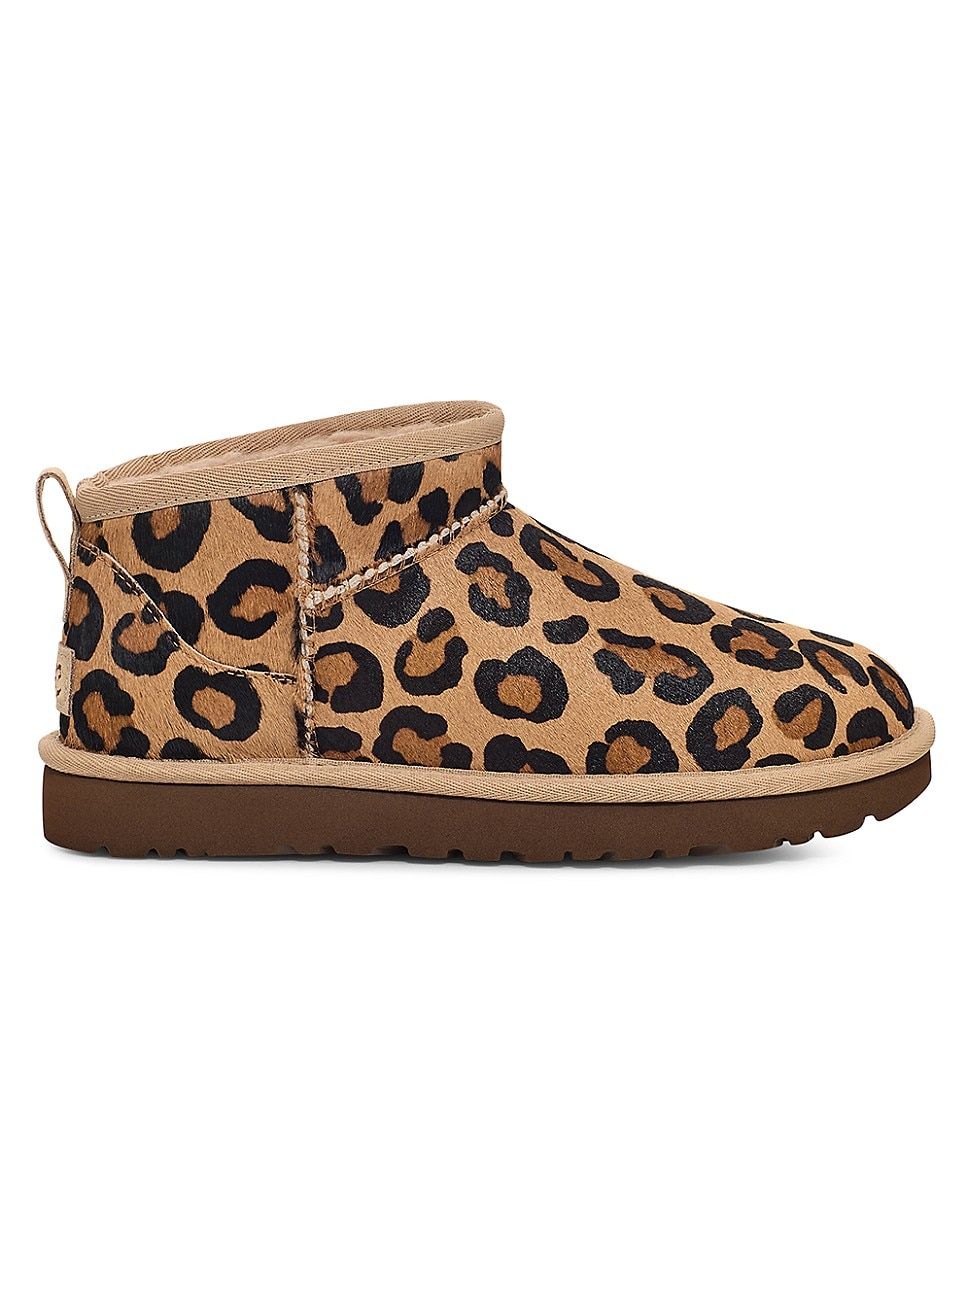 Women's Classic Ultra Mini Leopard-Print Calf Hair Boots - Natural - Size 7 | Saks Fifth Avenue